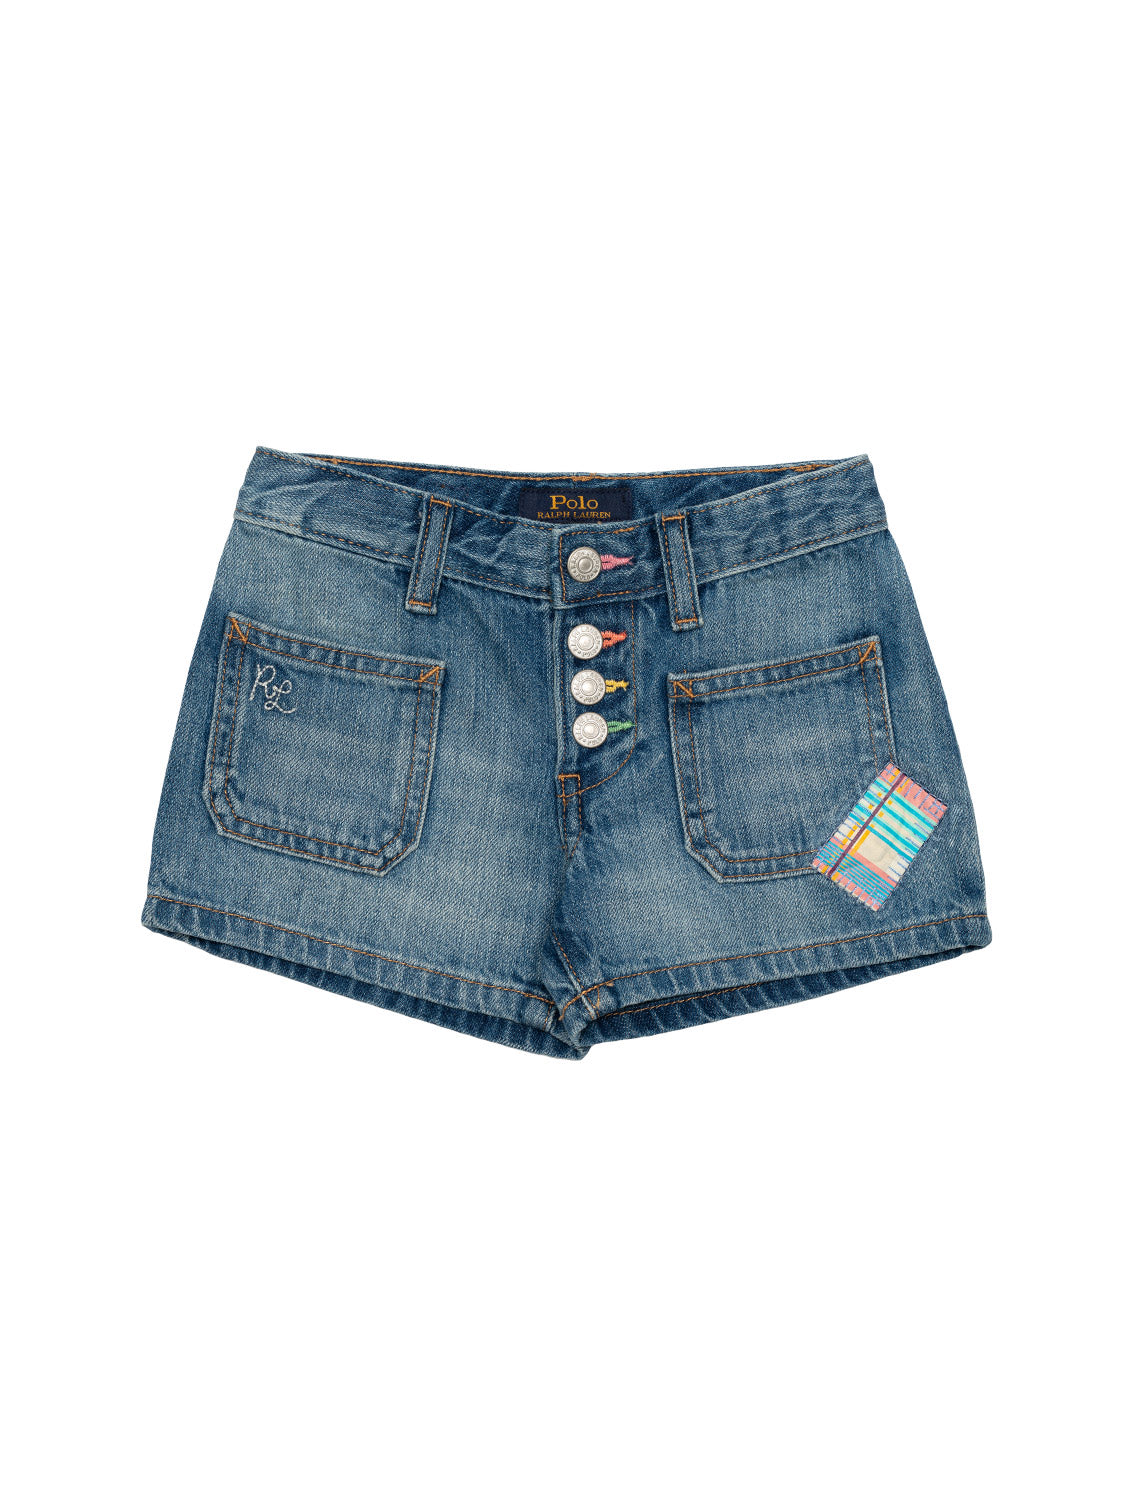 Jeans-Shorts mit Patches - Denim Blau